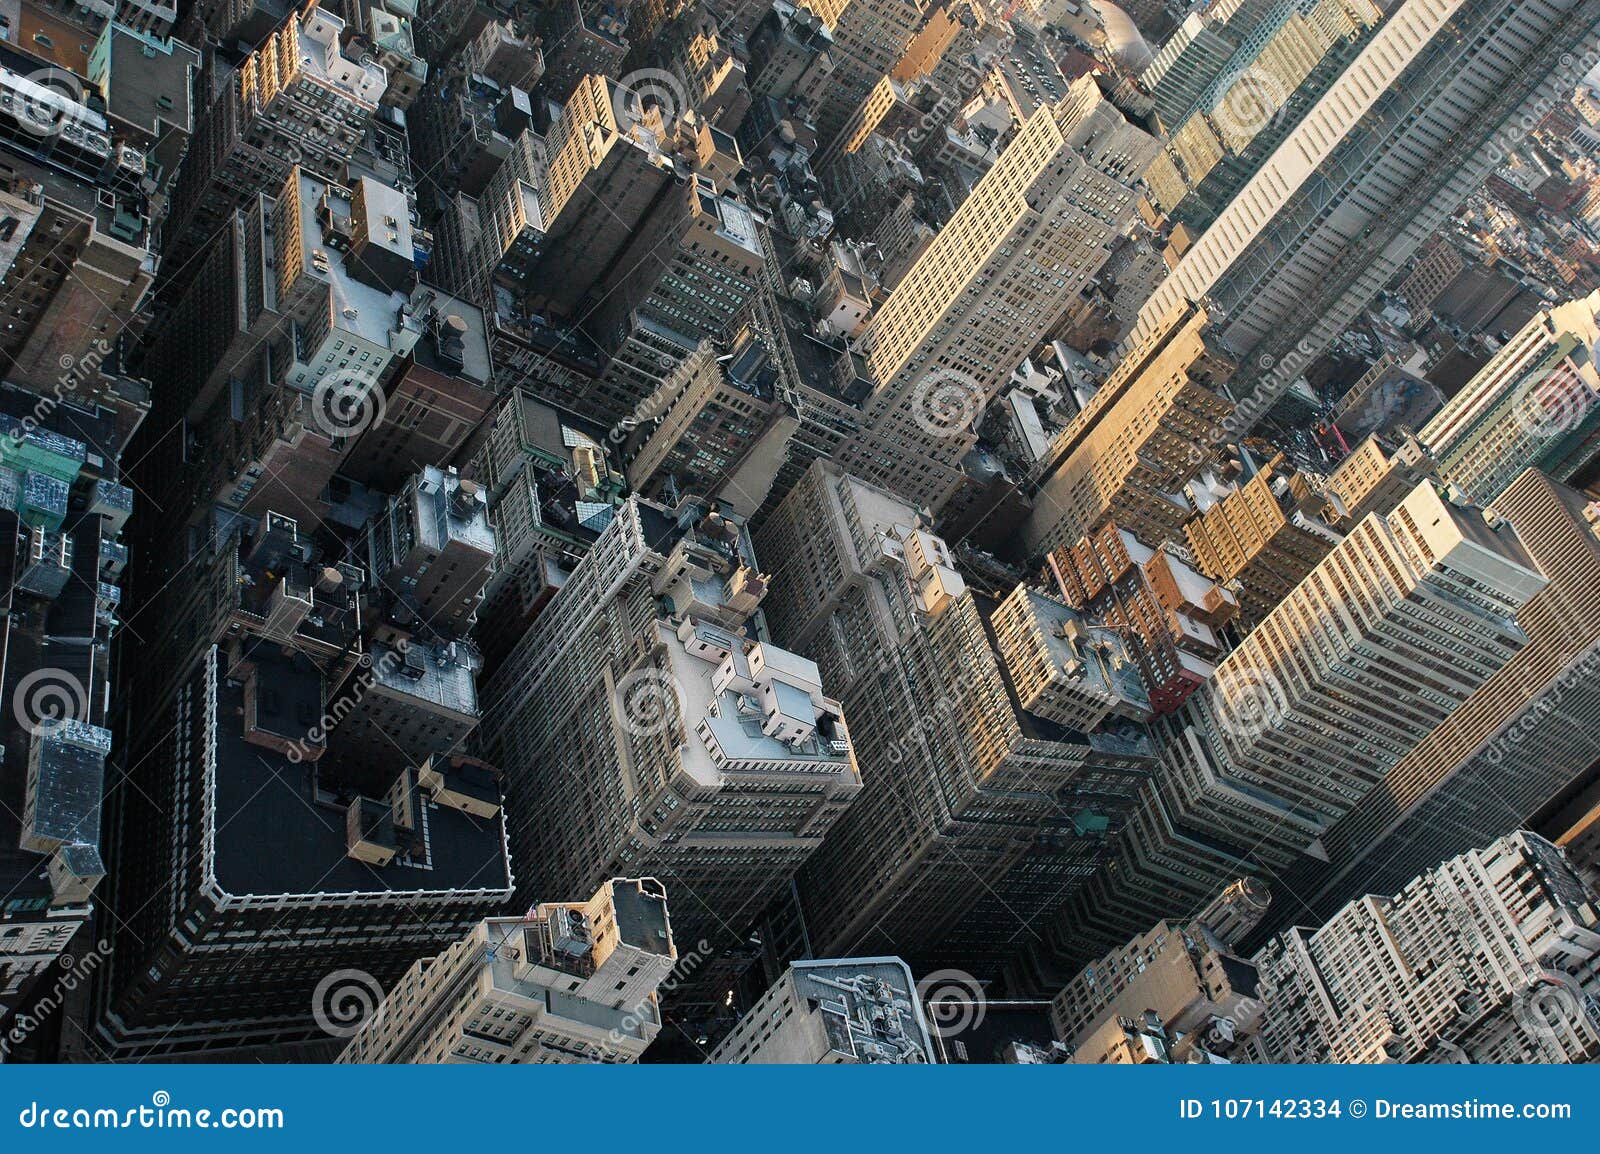 new york city above lego miniature vertigo dutchplan